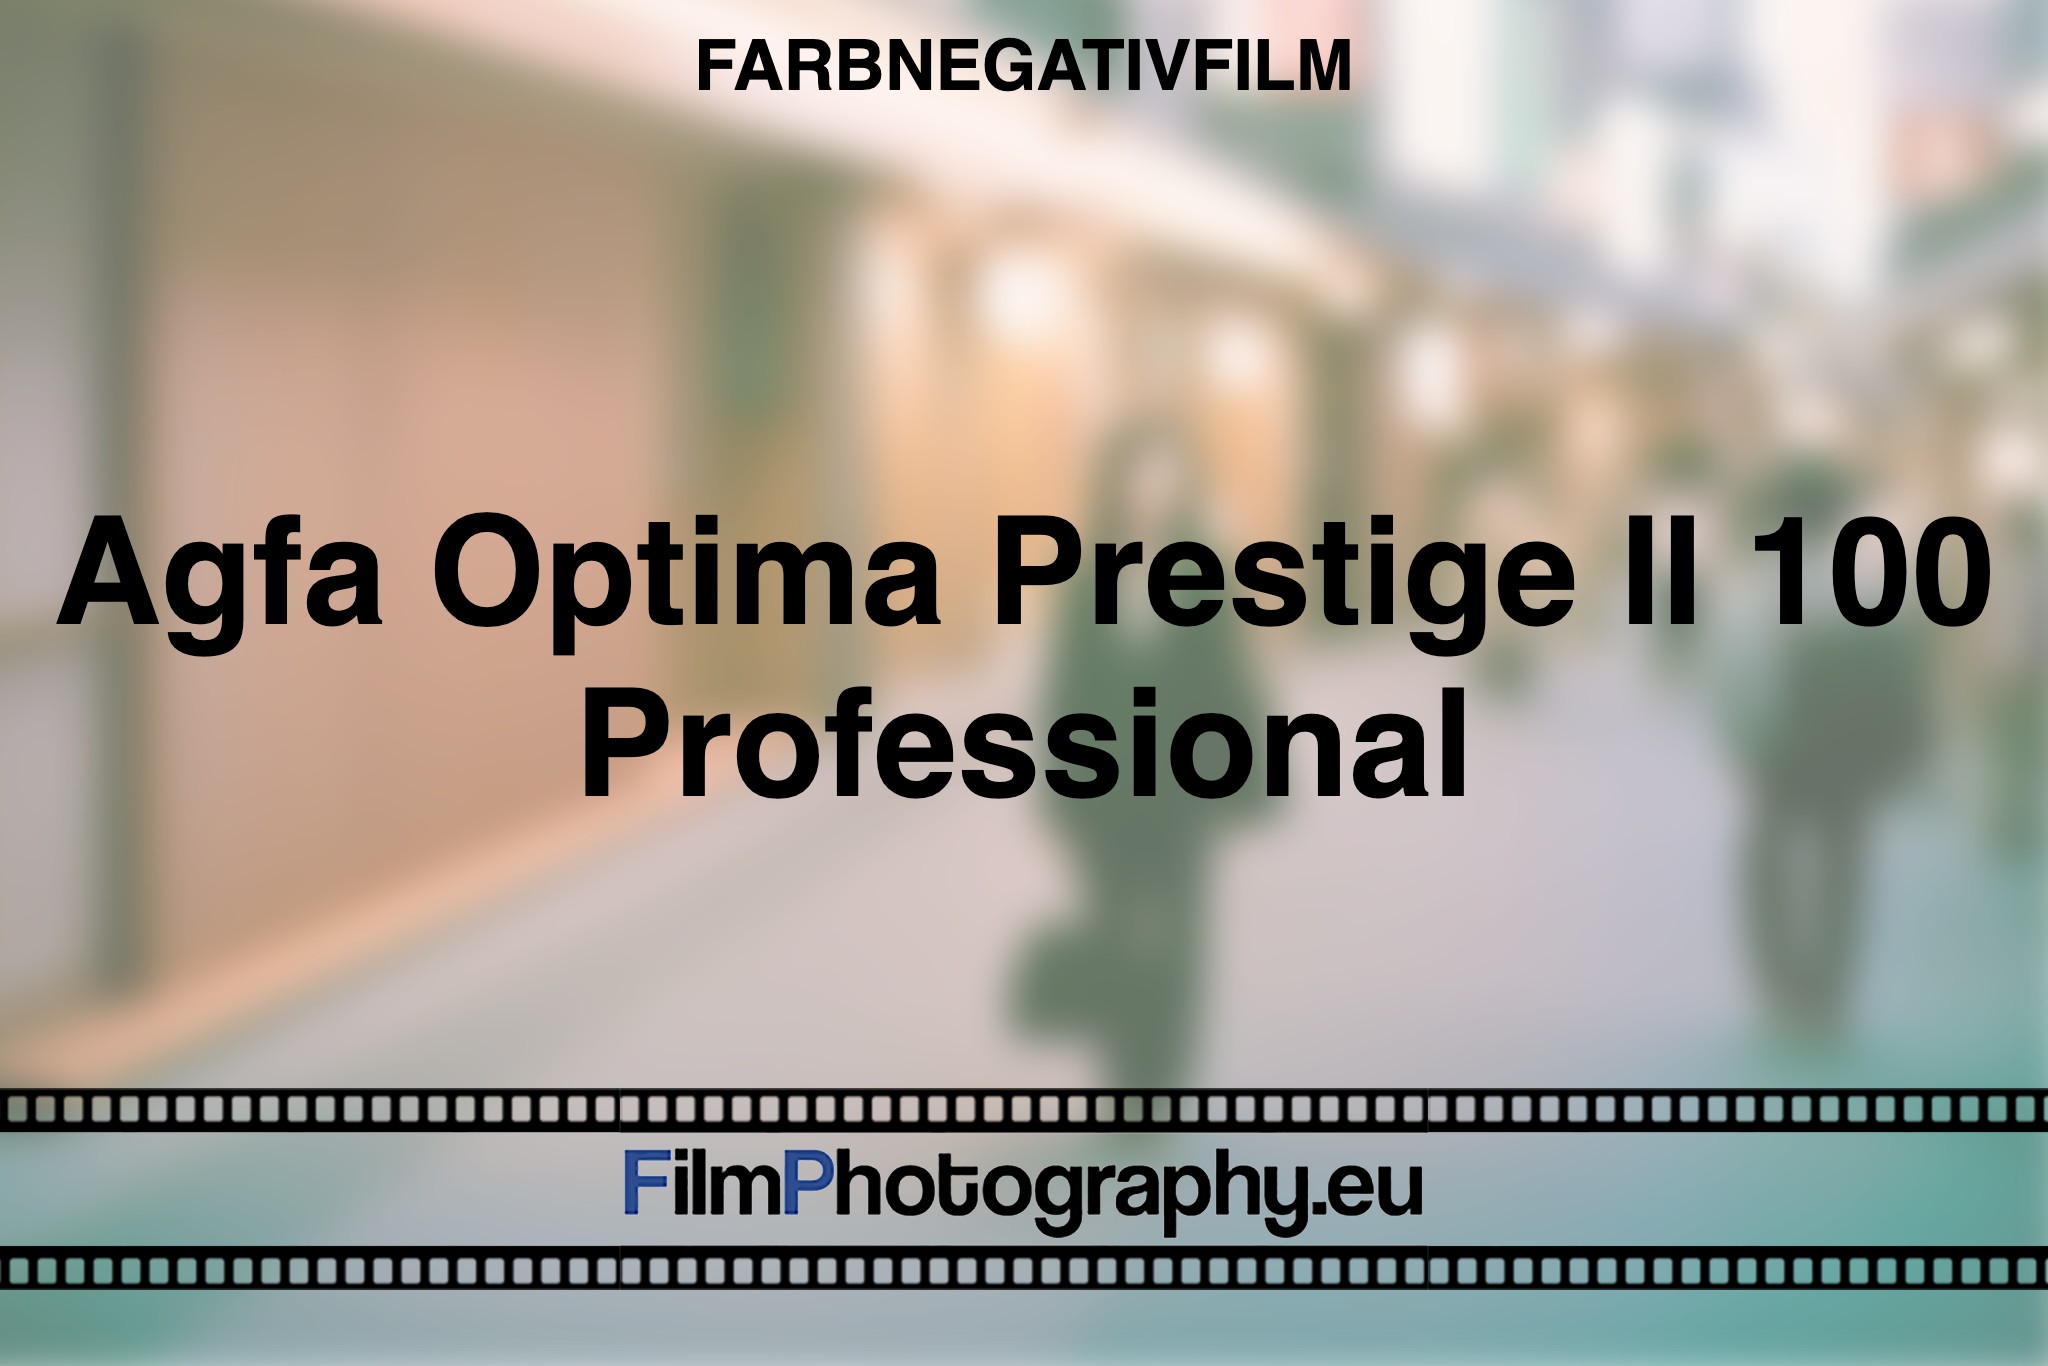 agfa-optima-prestige-ii-100-professional-farbnegativfilm-bnv